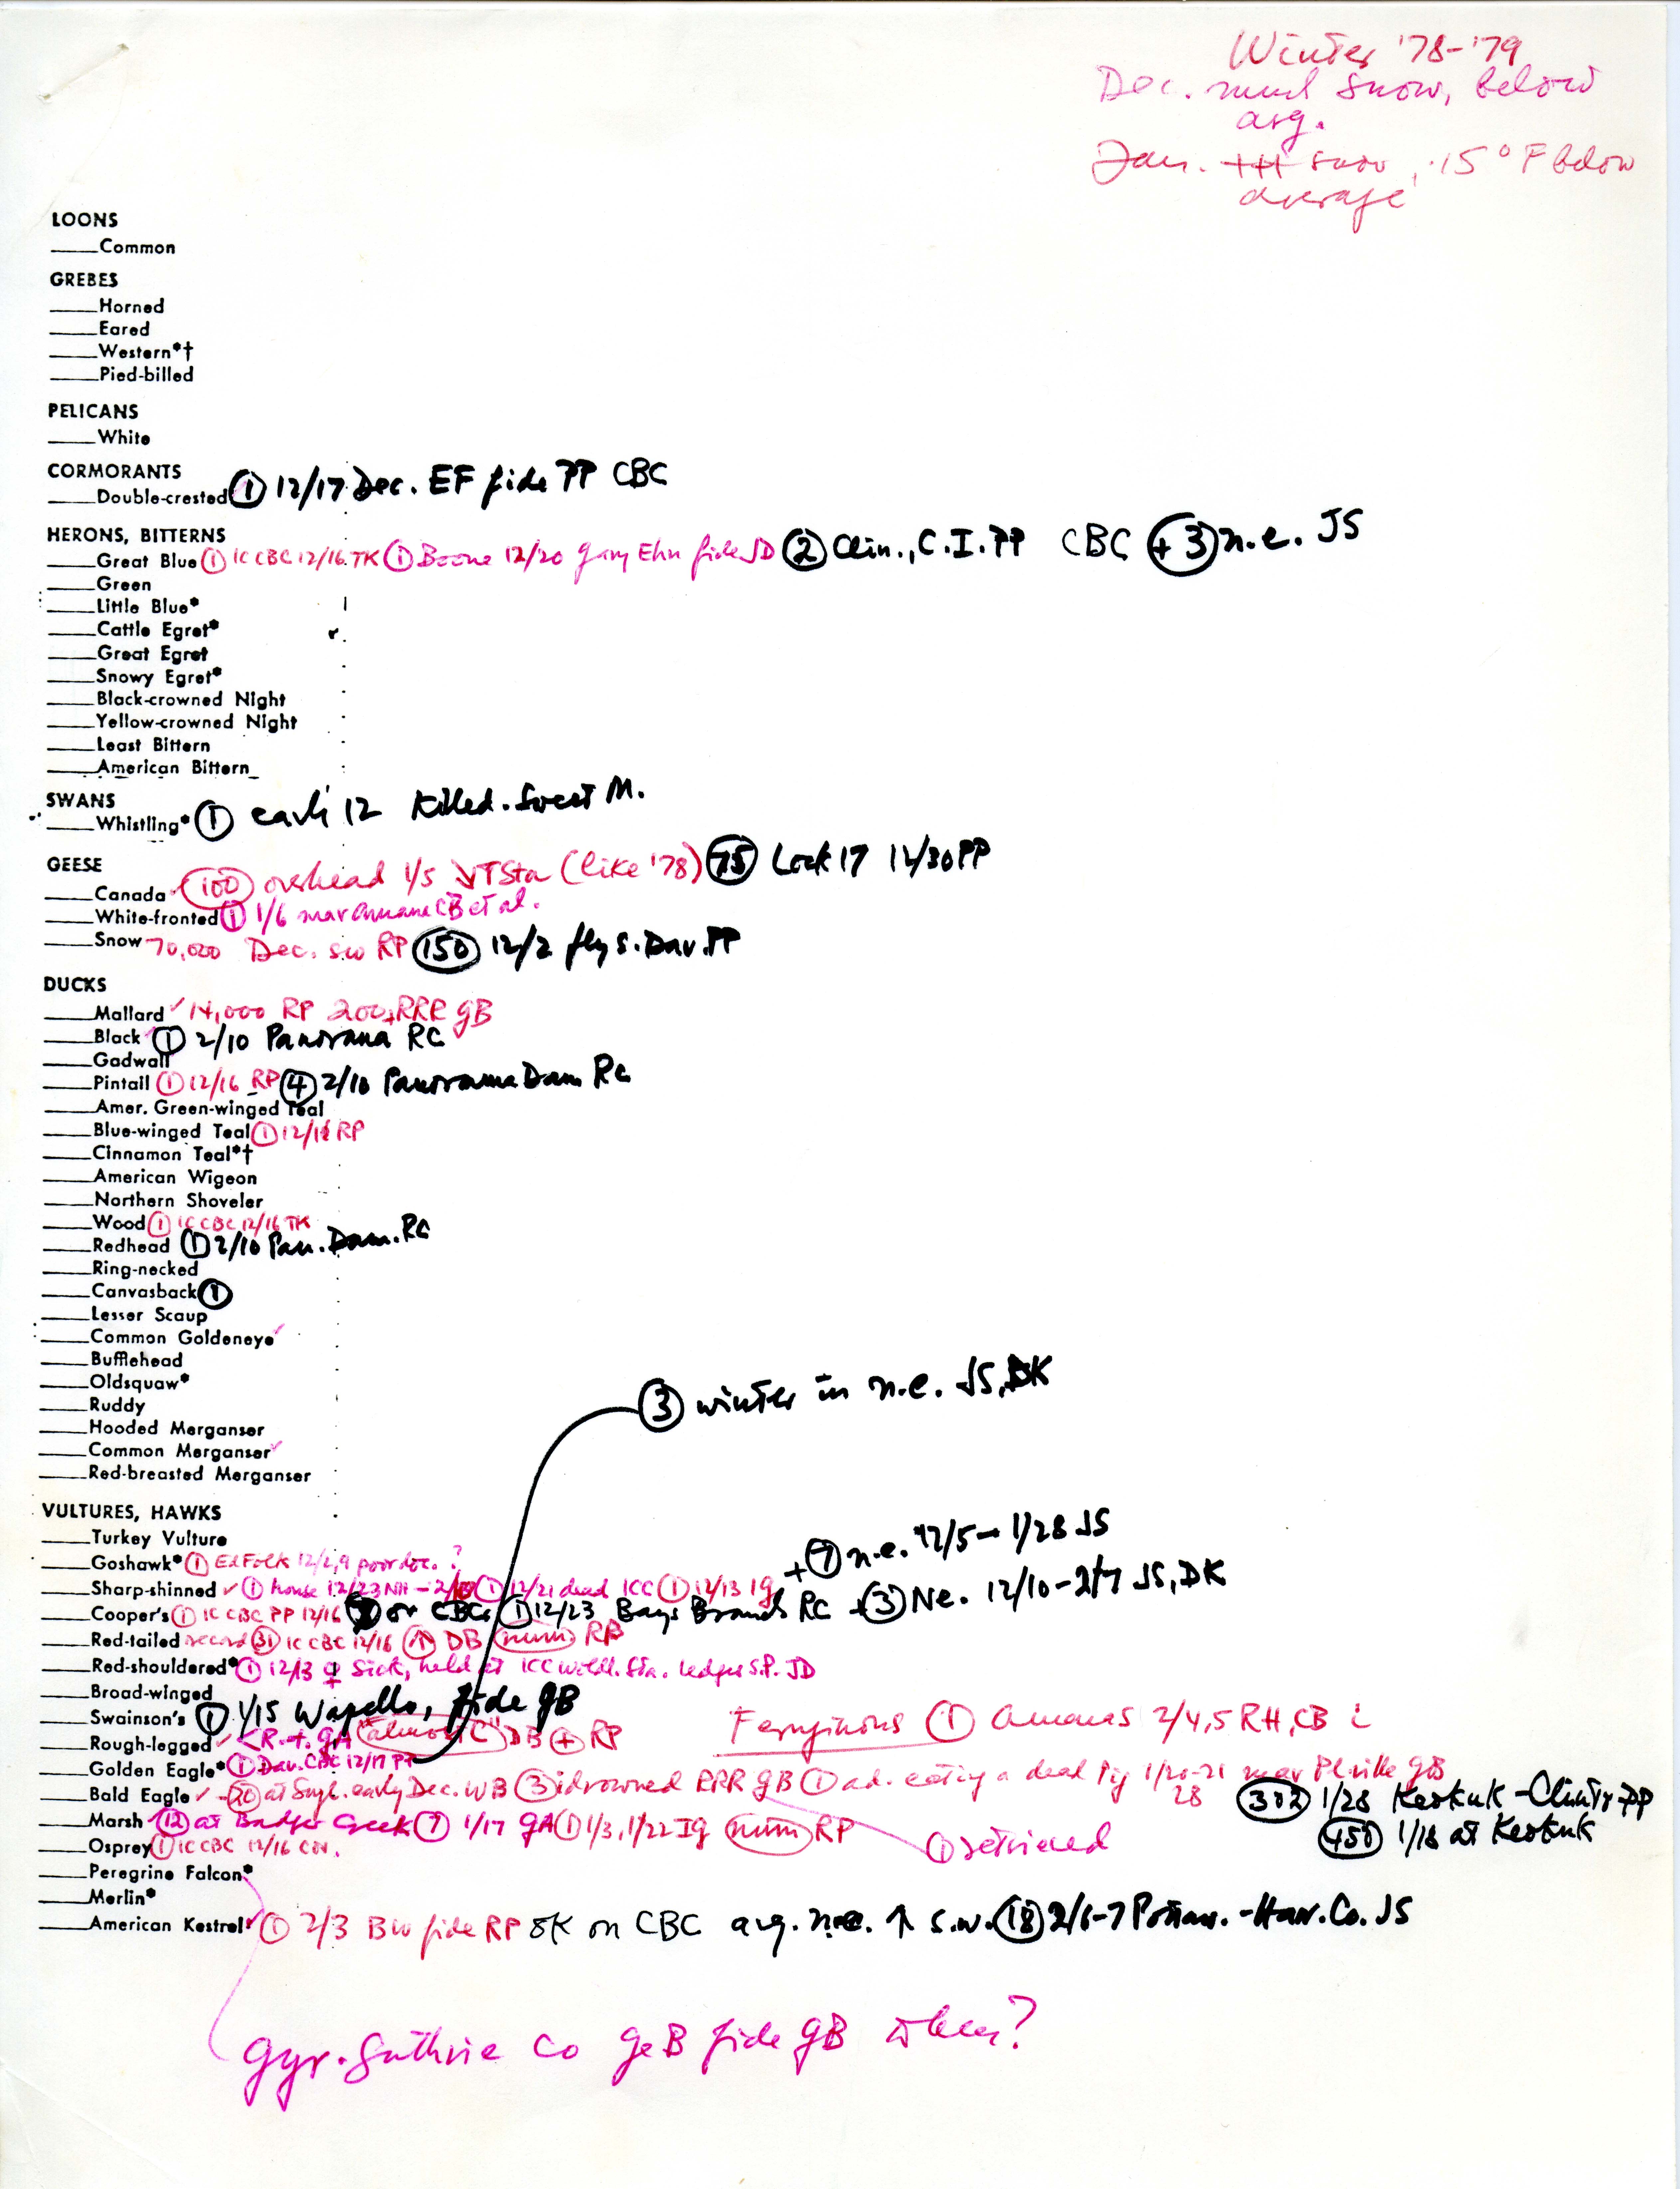 Bird sightings checklist, winter 1978-1979